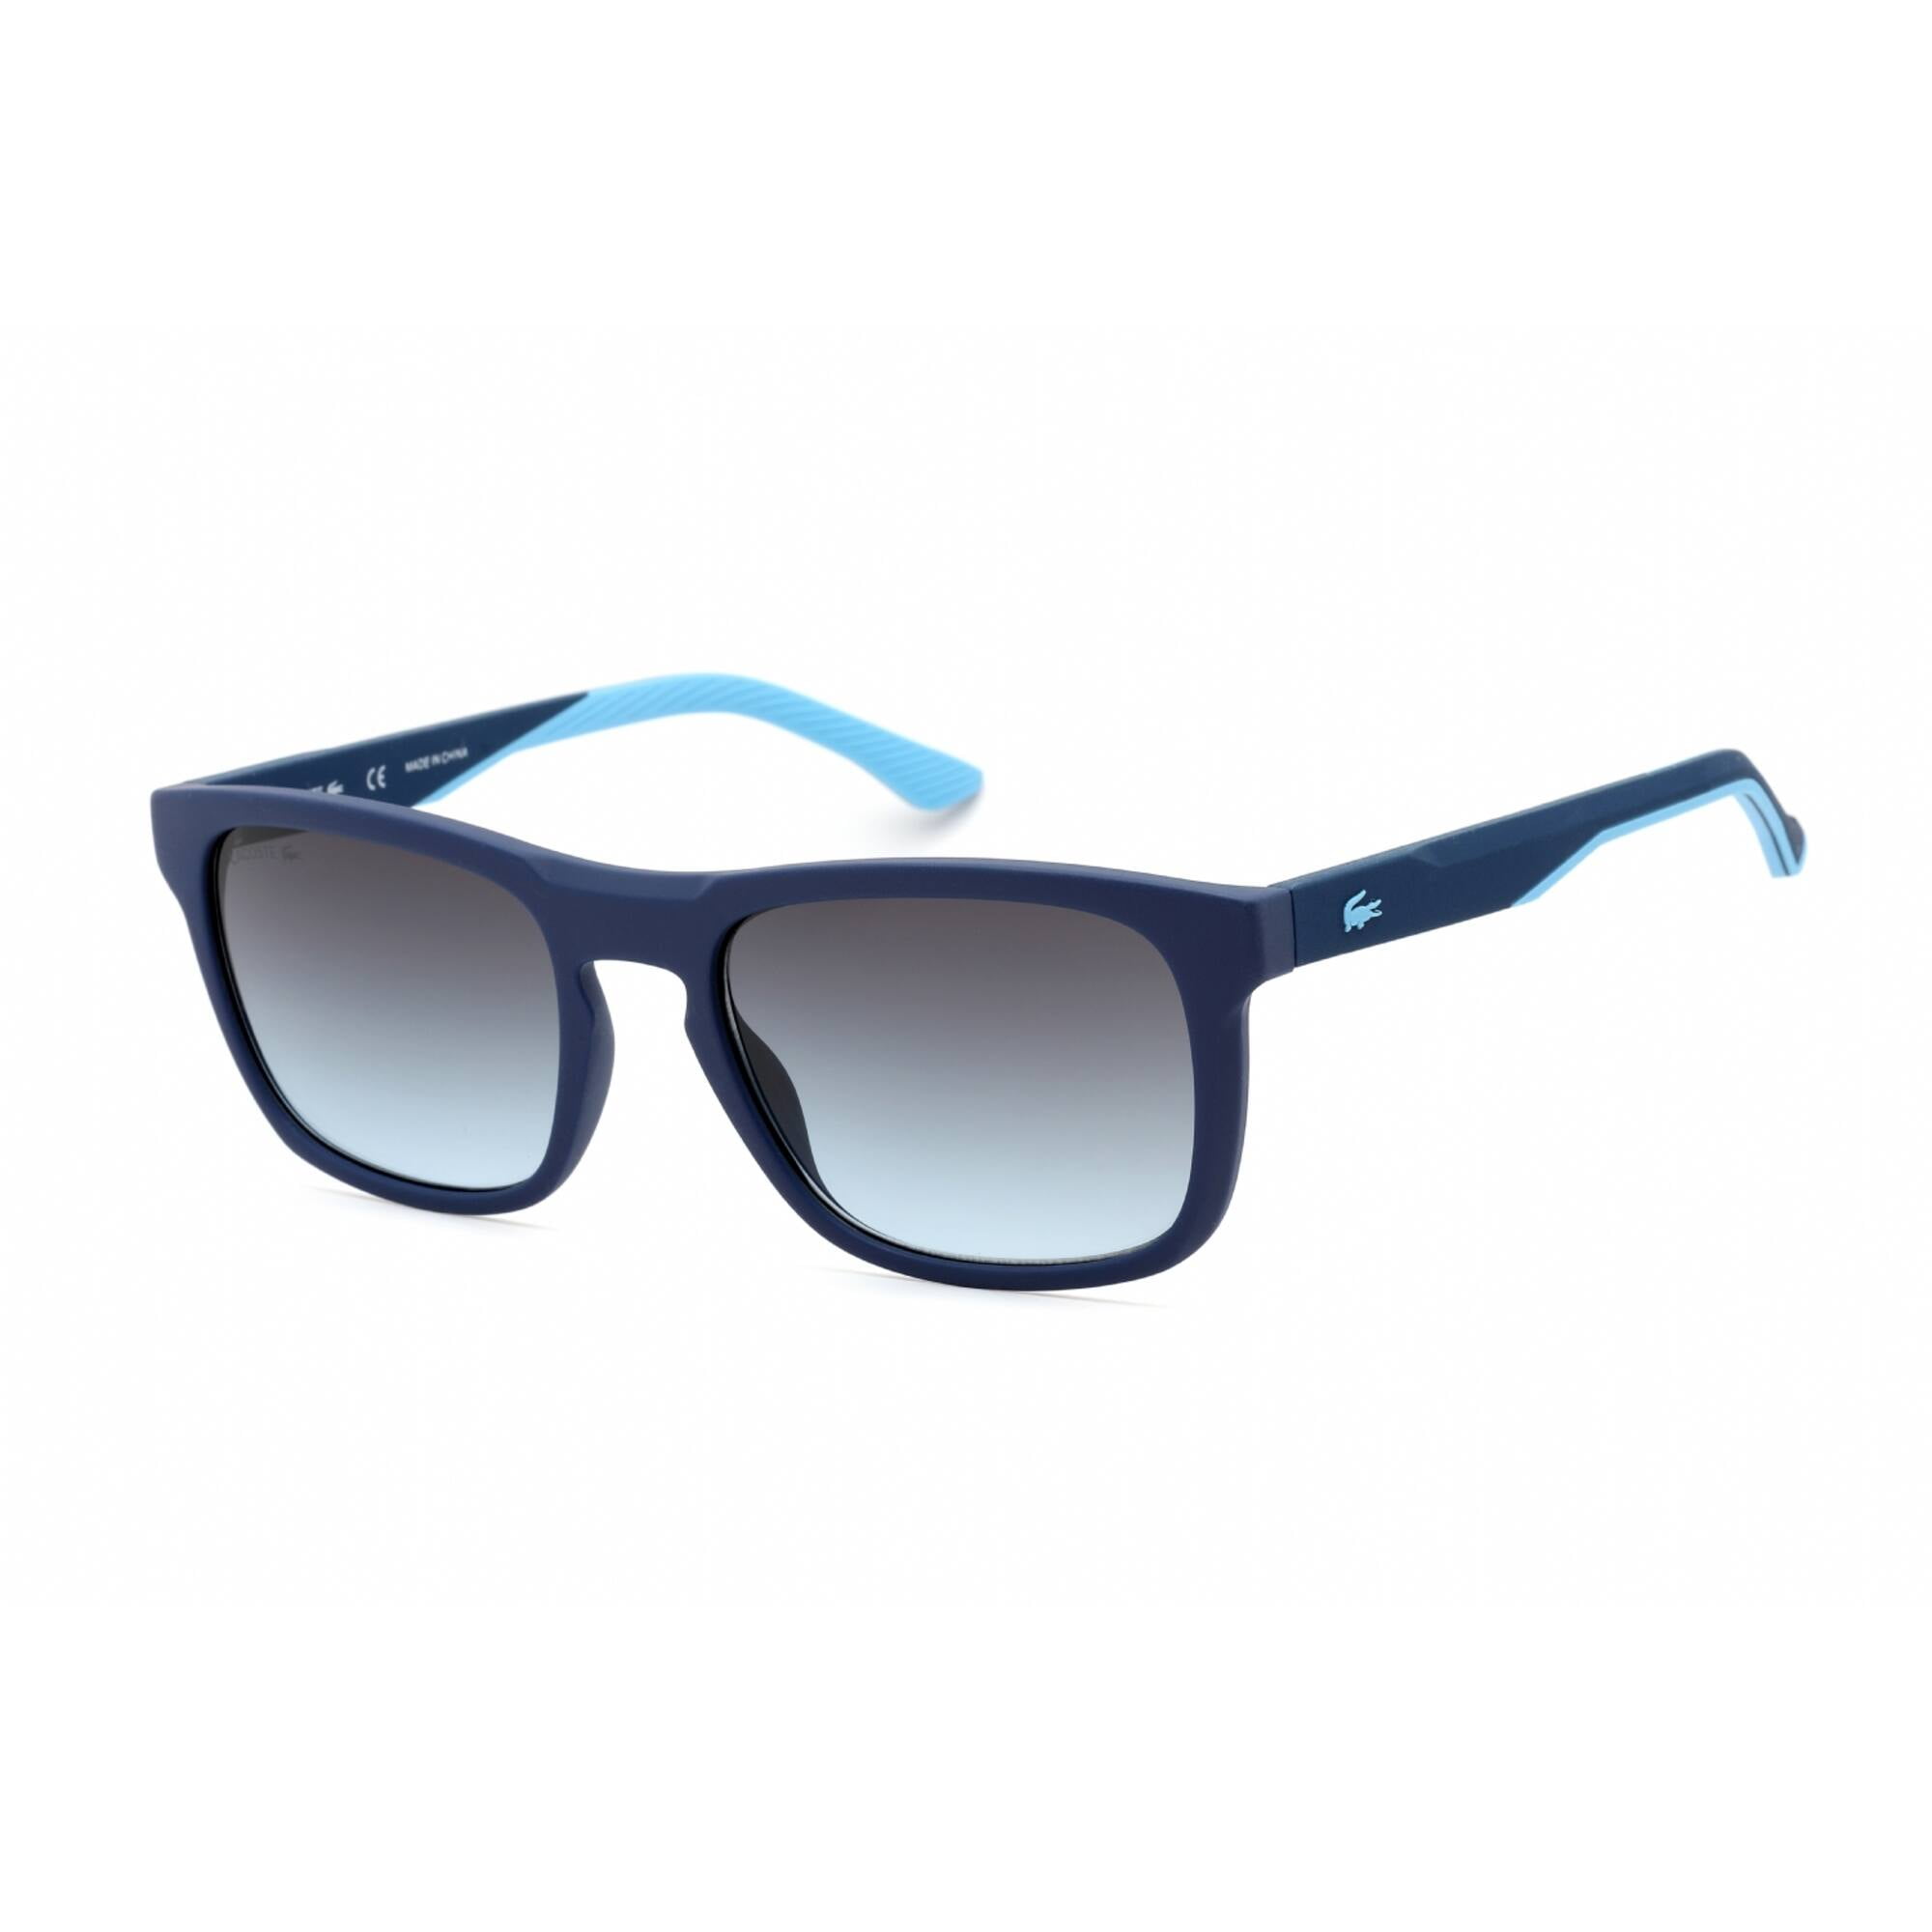 Buy Lacoste Fashion unisex Sunglasses L664S-414-55 - Ashford.com